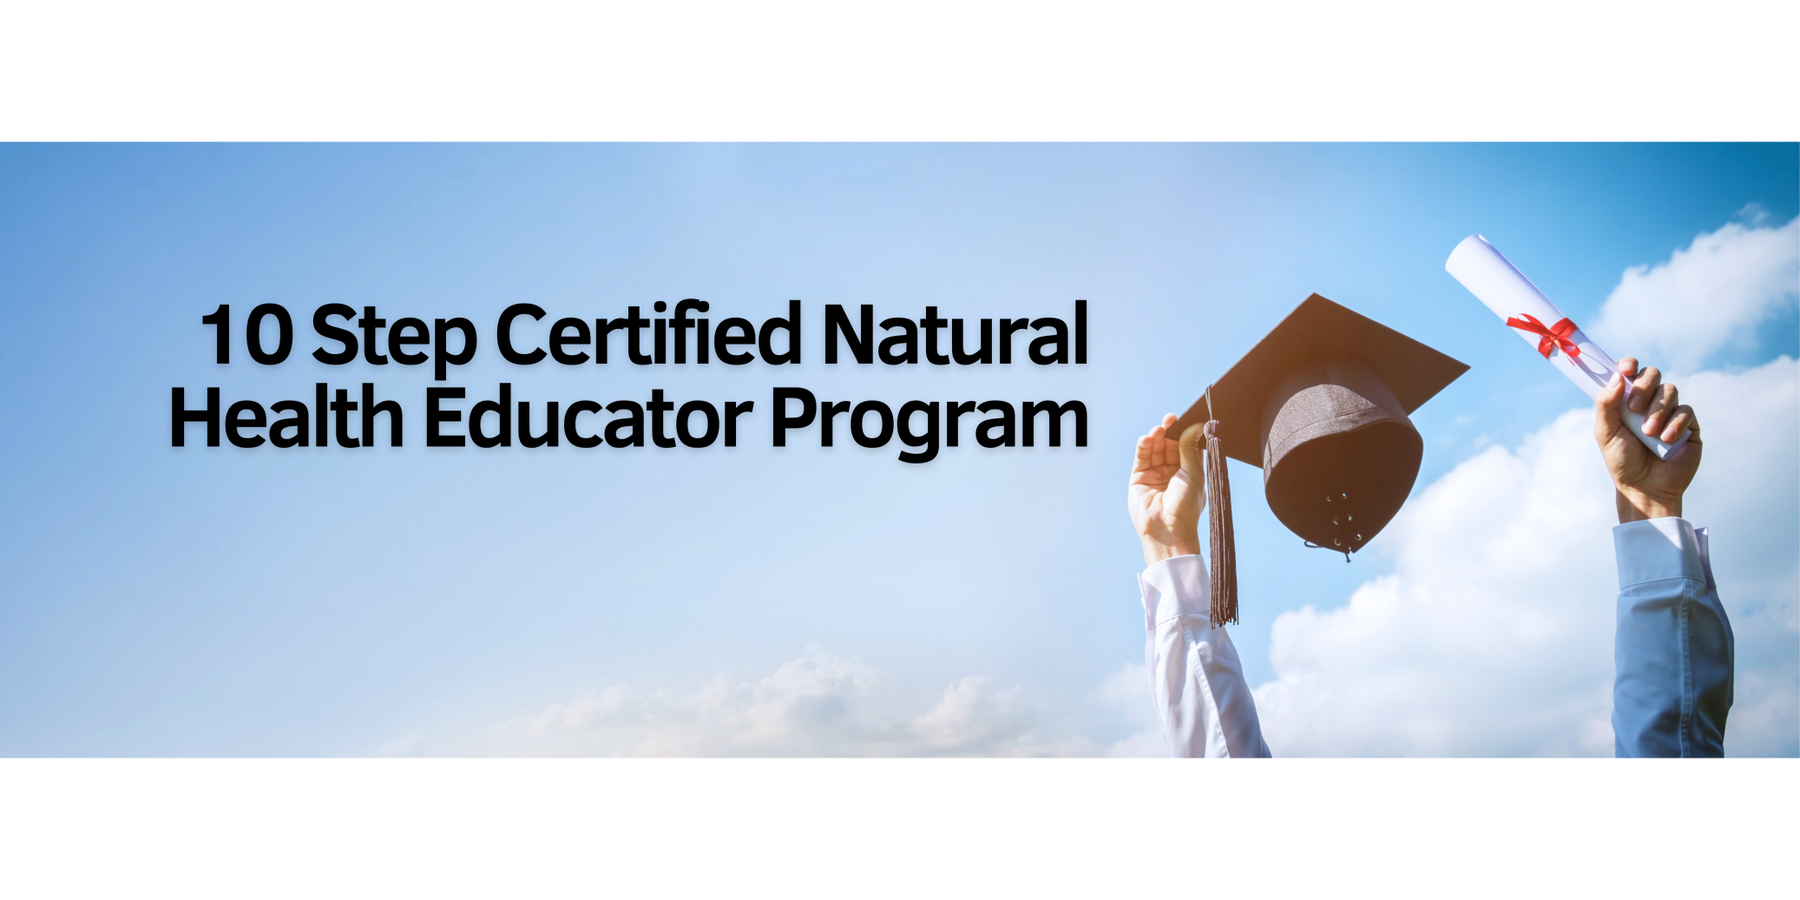 10 Step Certified Natural Health Educator Program